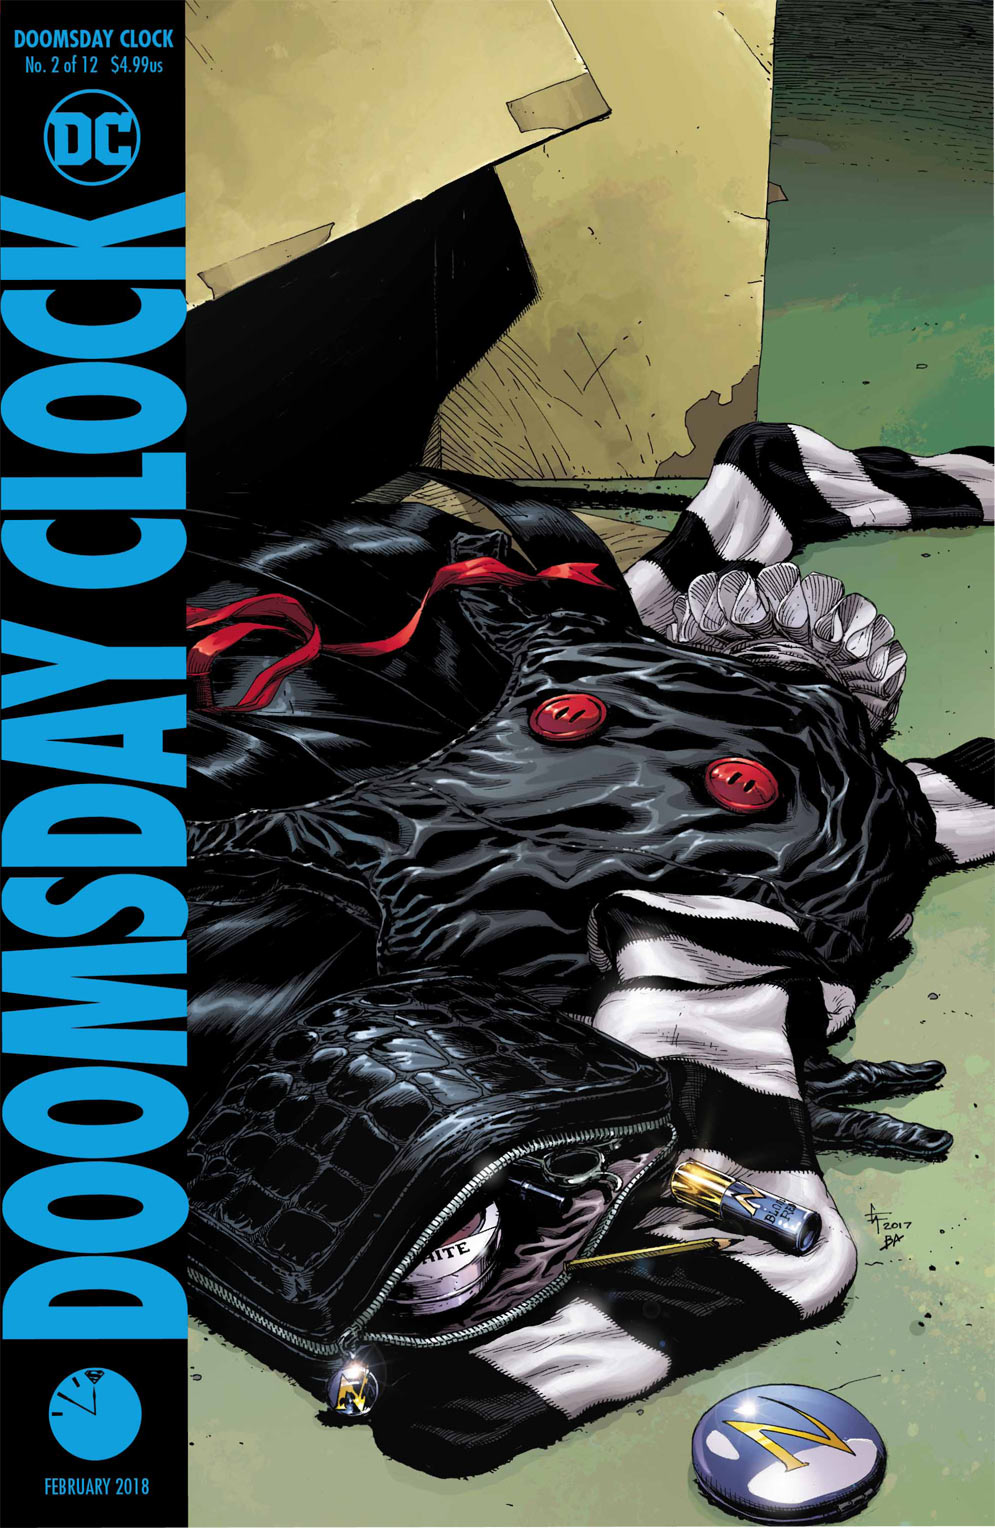 Doomsday Clock Cover #2 - DC Comics News